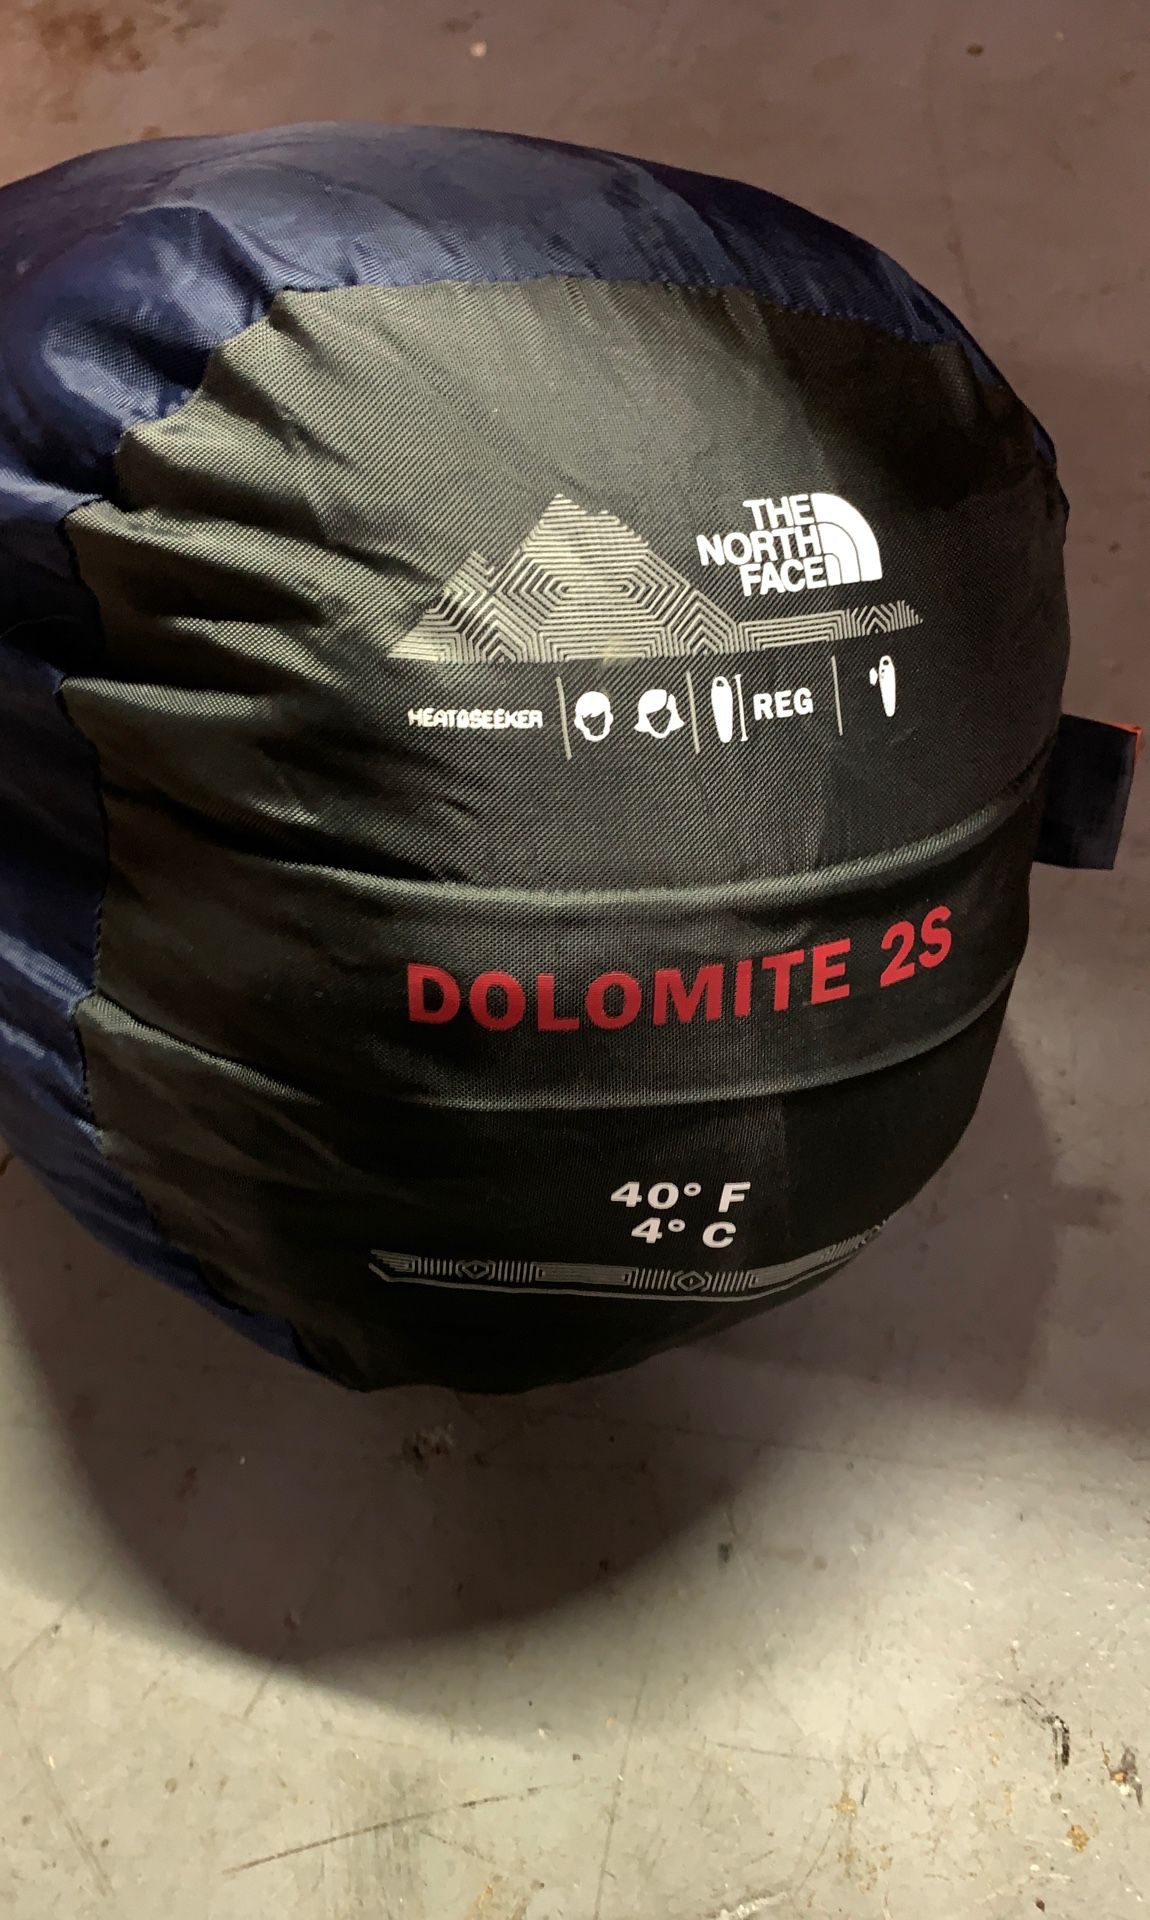 North face Dolomite 2S sleeping bag 40F